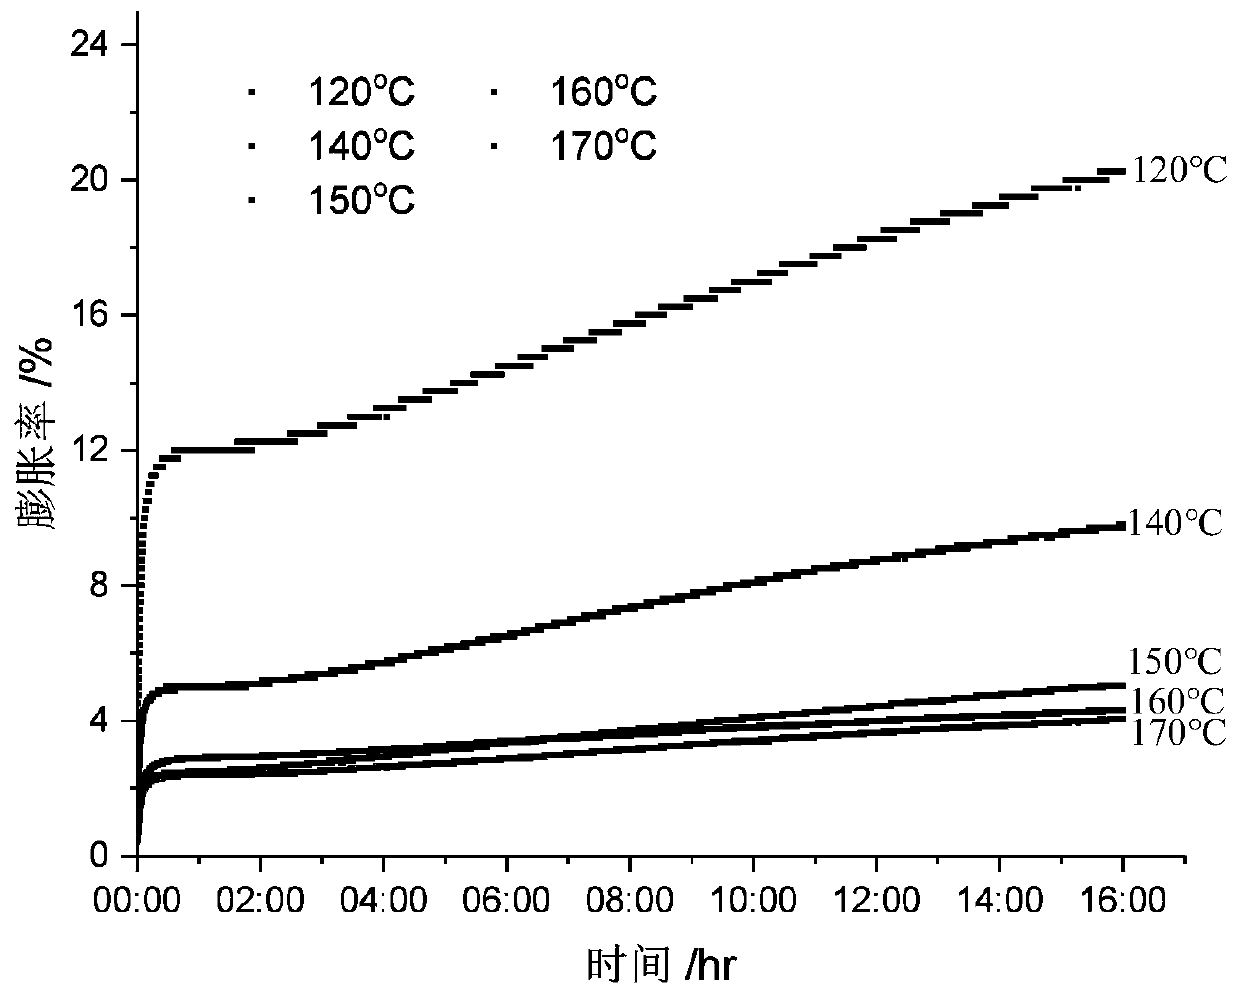 High-temperature heat-response bentonite and high-temperature heat-response bentonite drilling fluid